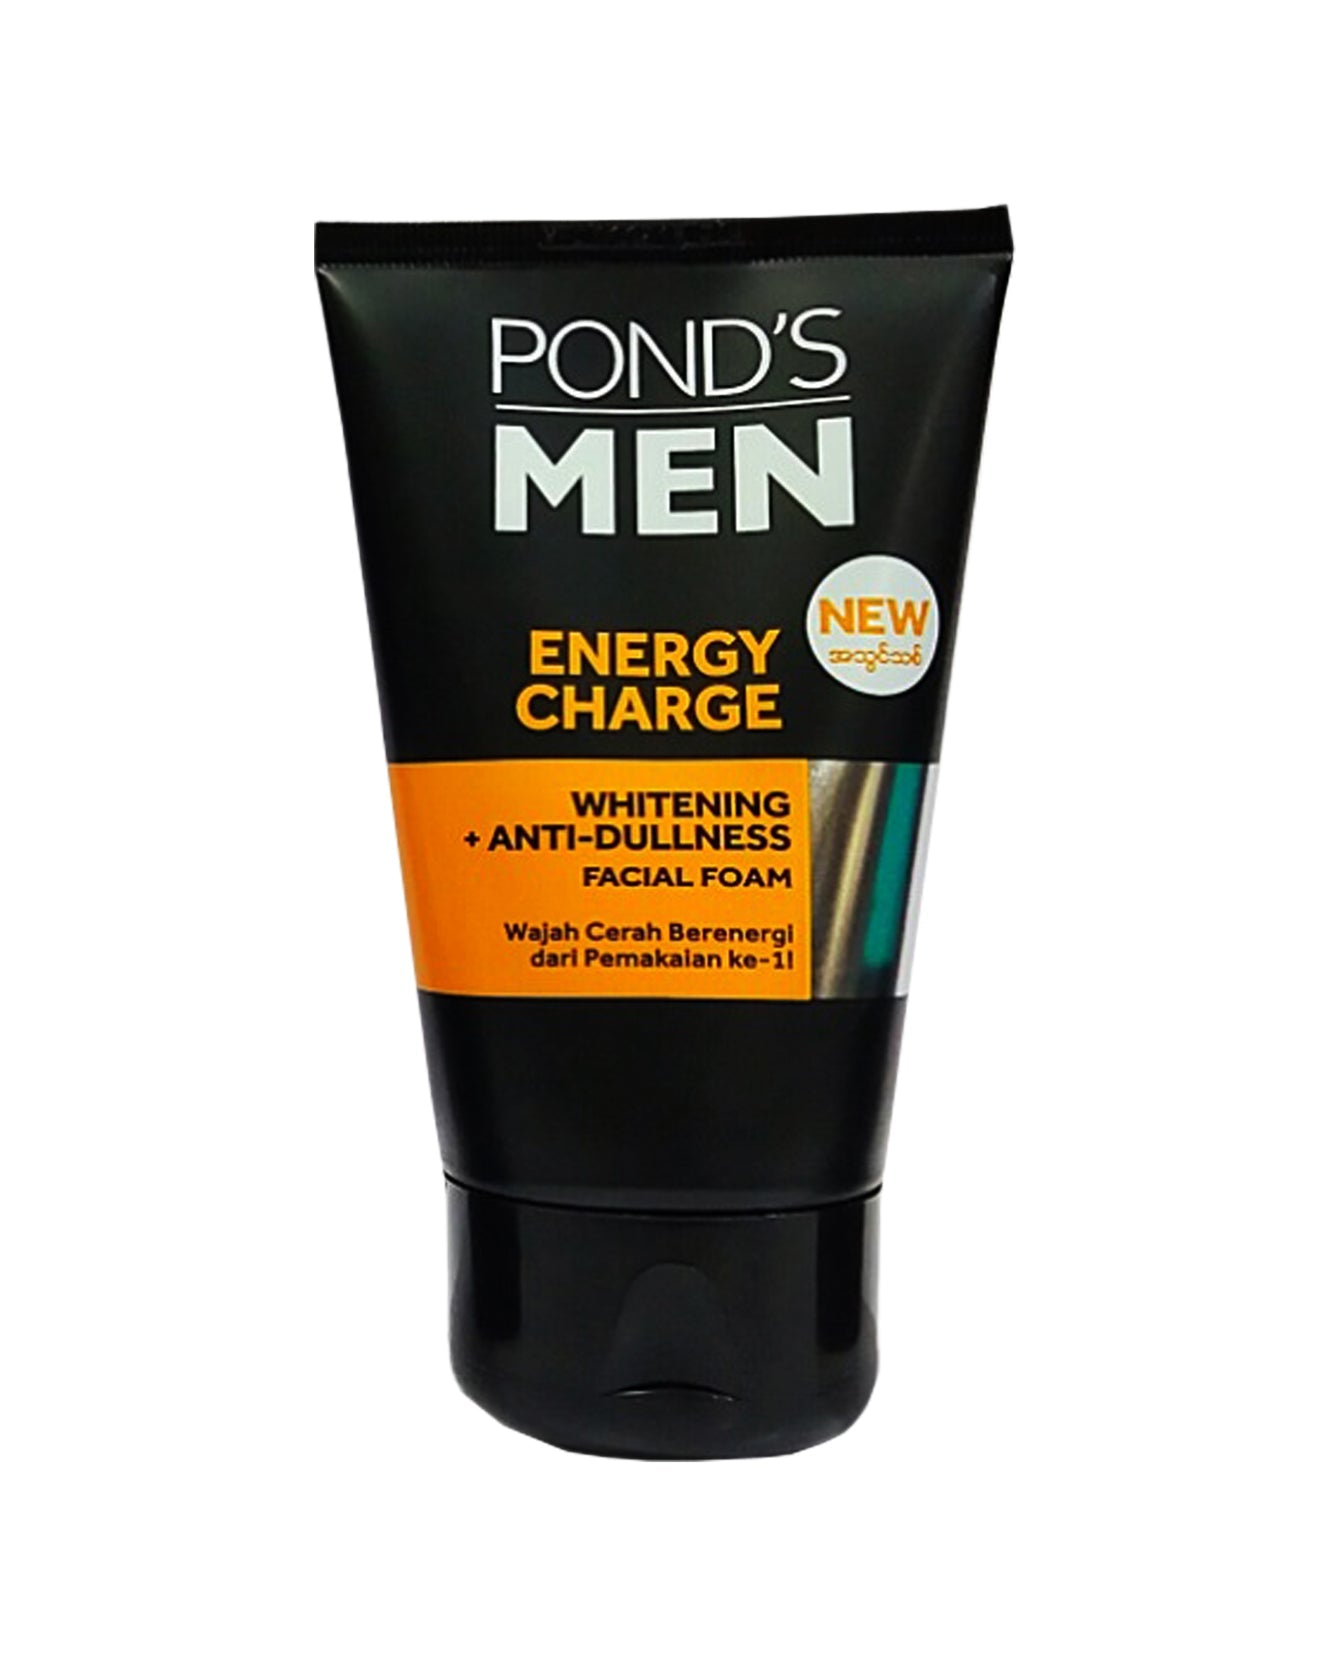 Pond's Men Energy Charge Facial Foam